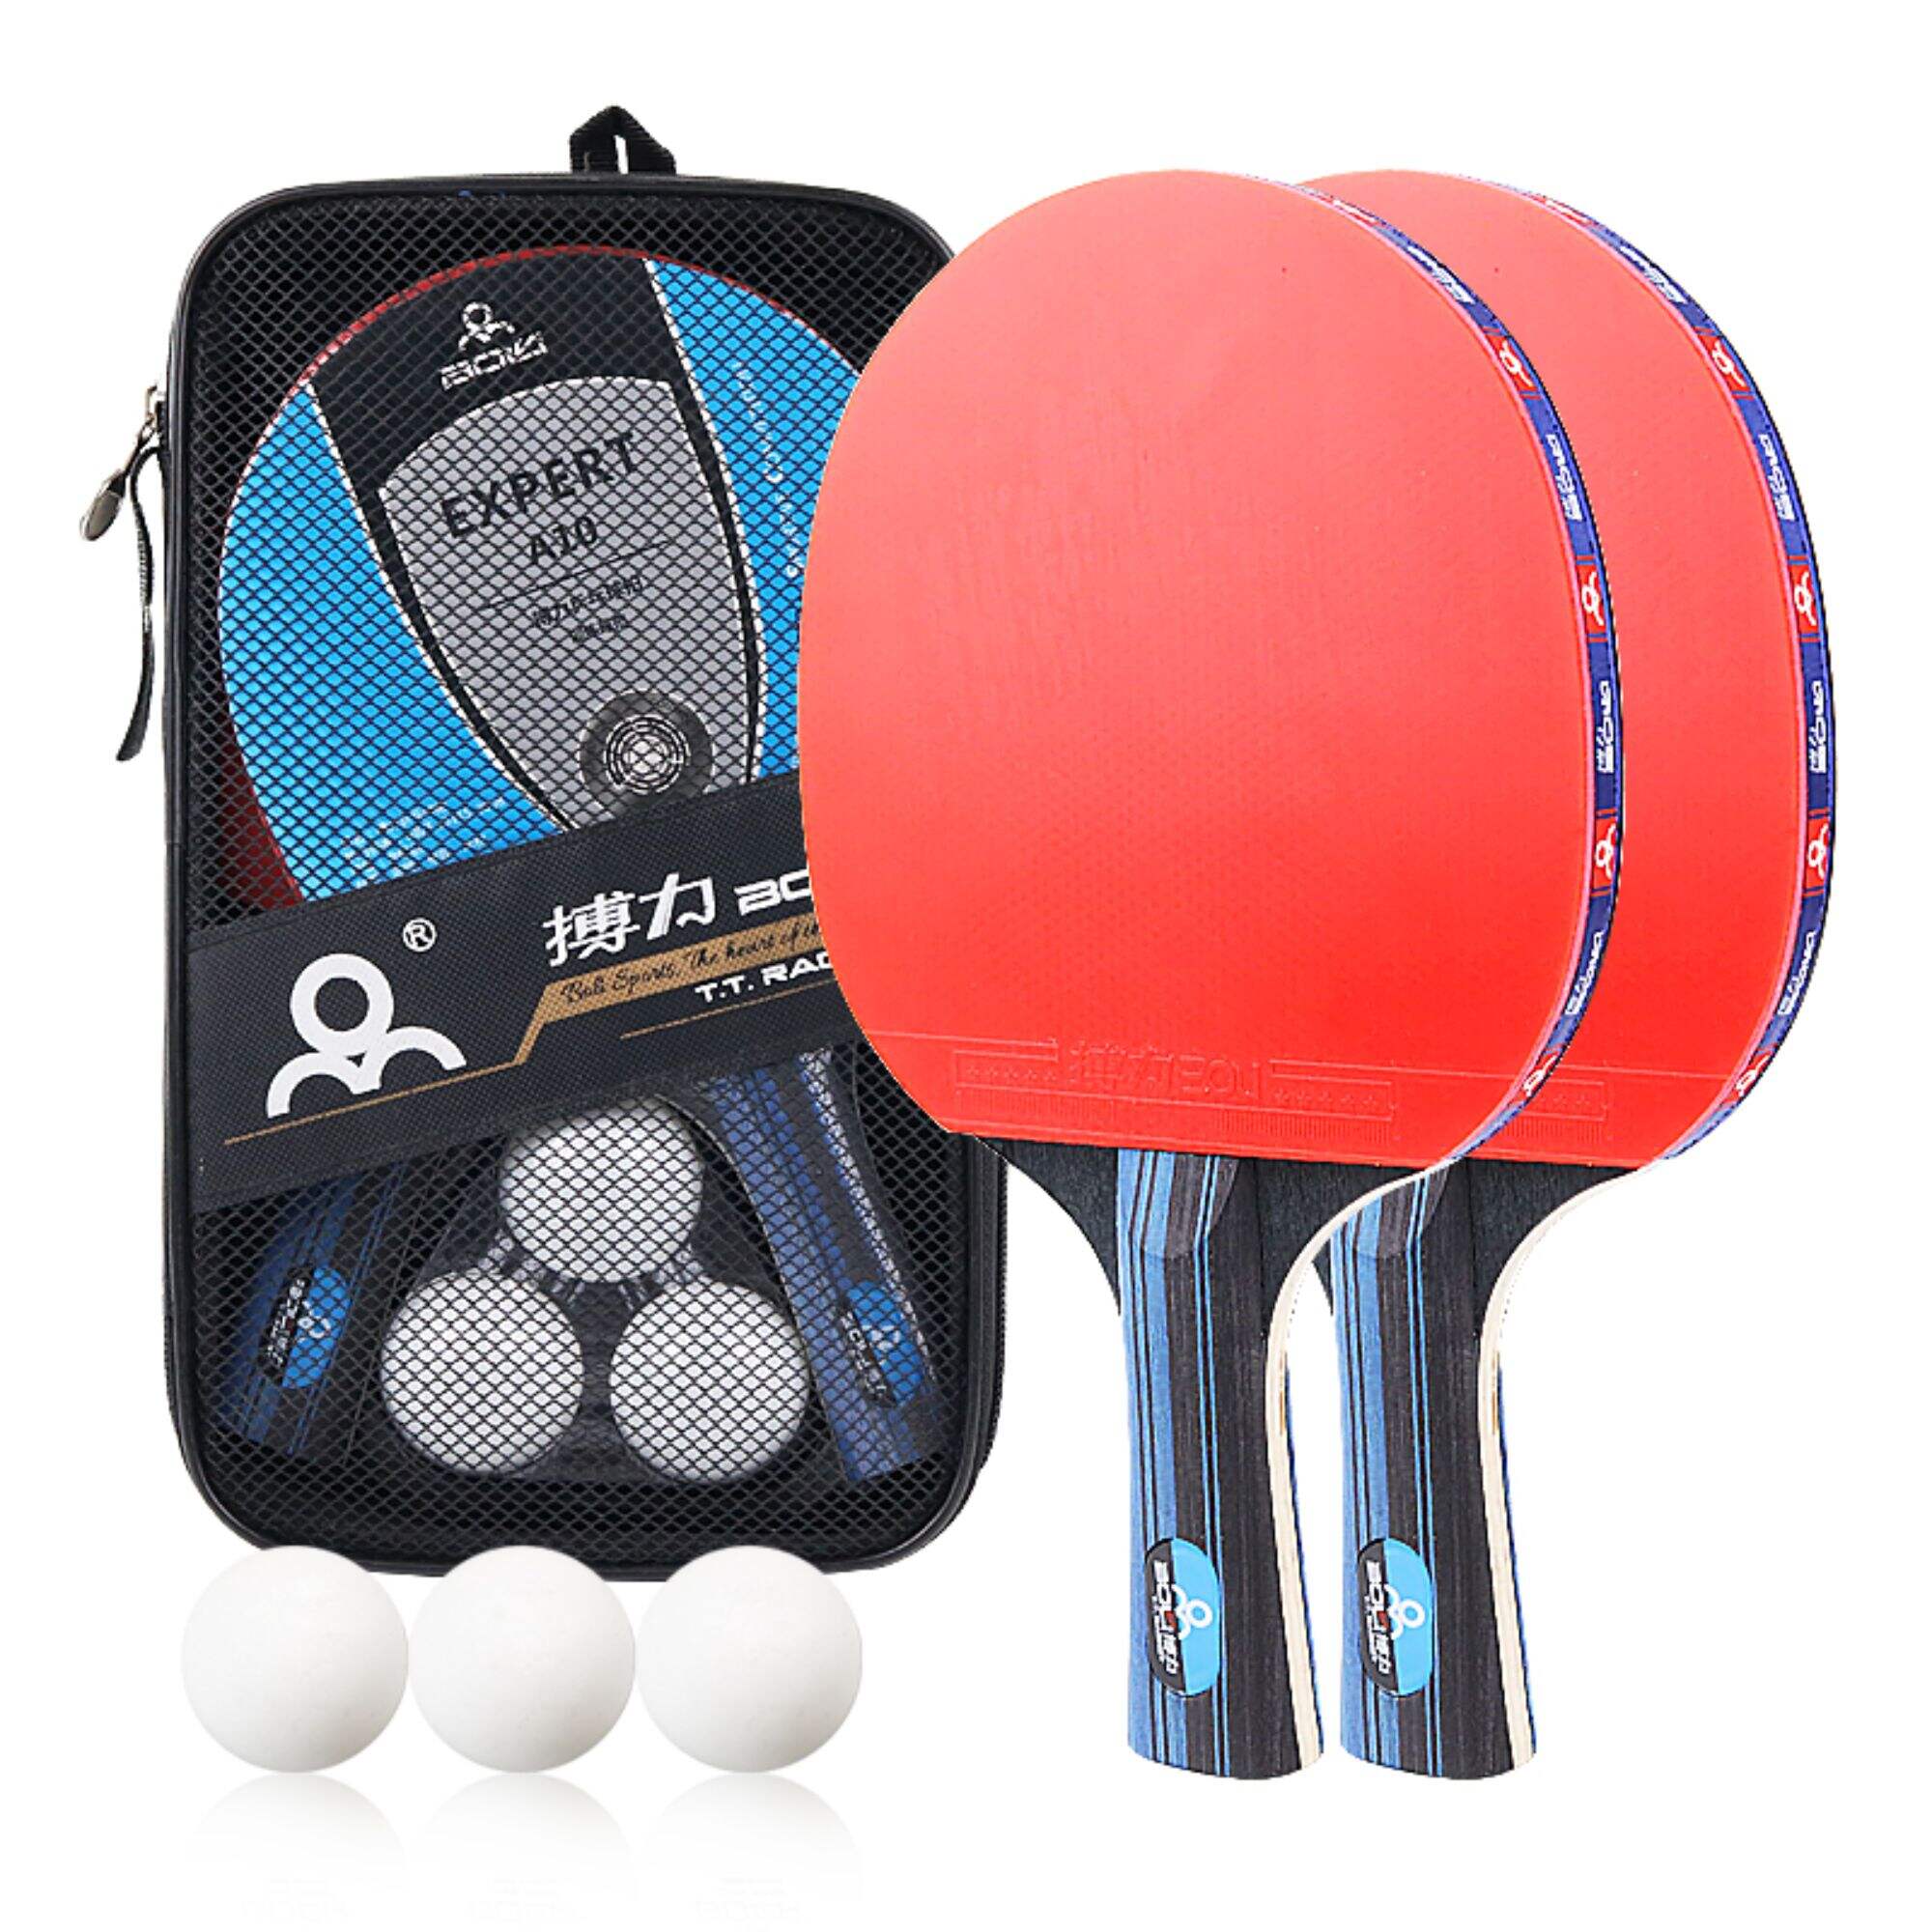 A10 Professional Table Ping Pong Bat Tennis Racket Set